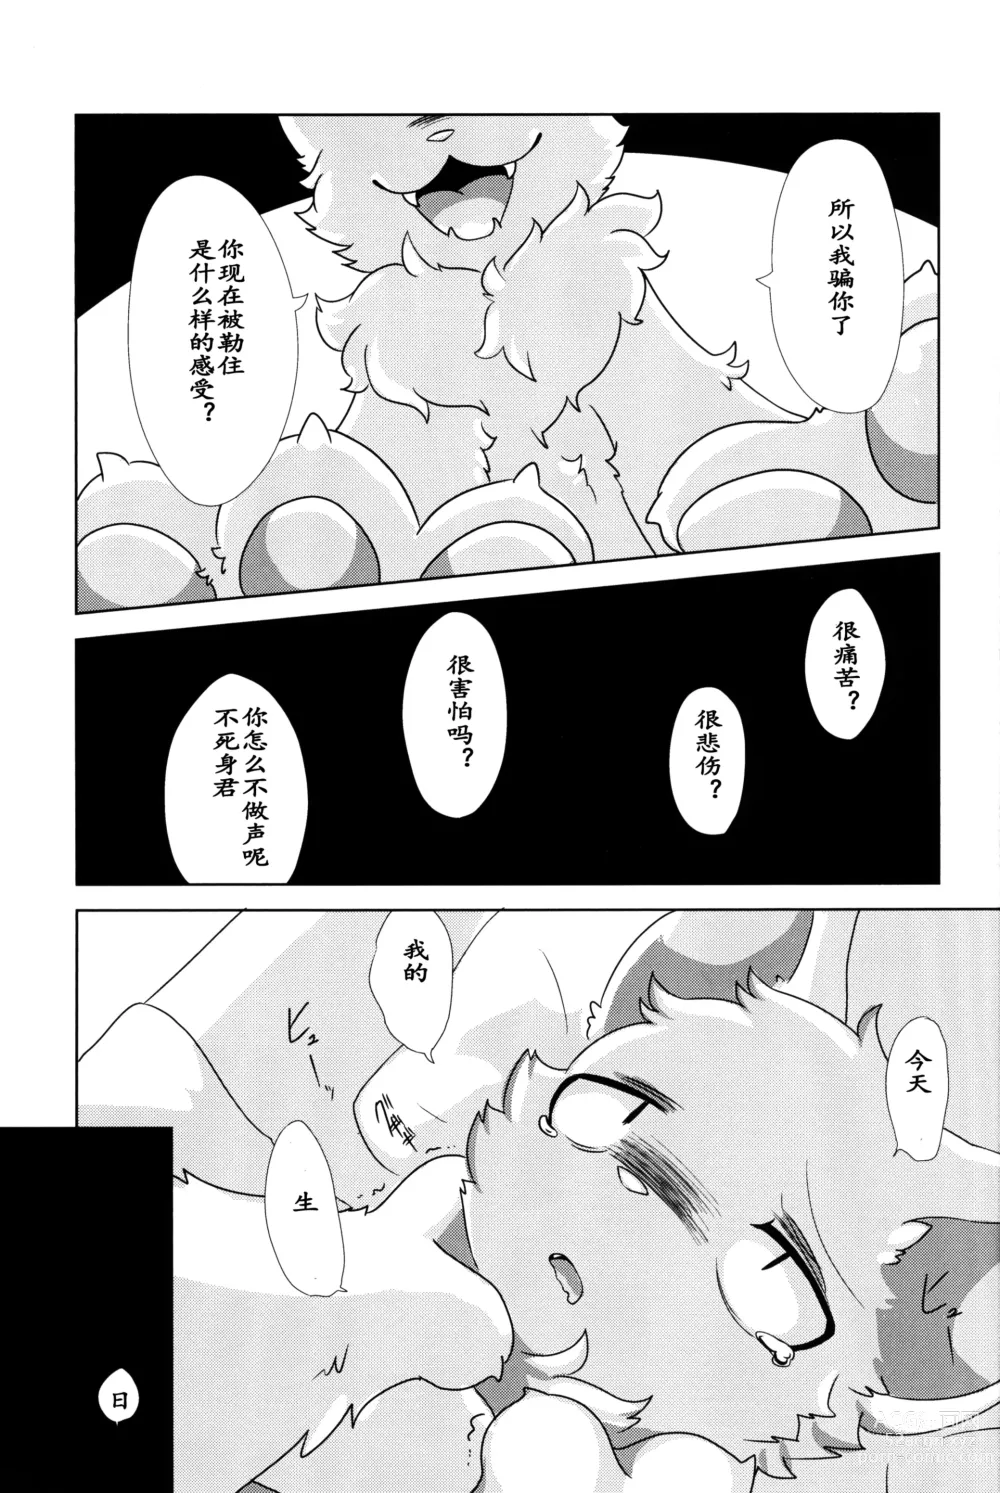 Page 8 of doujinshi 我亲爱的杀人鬼